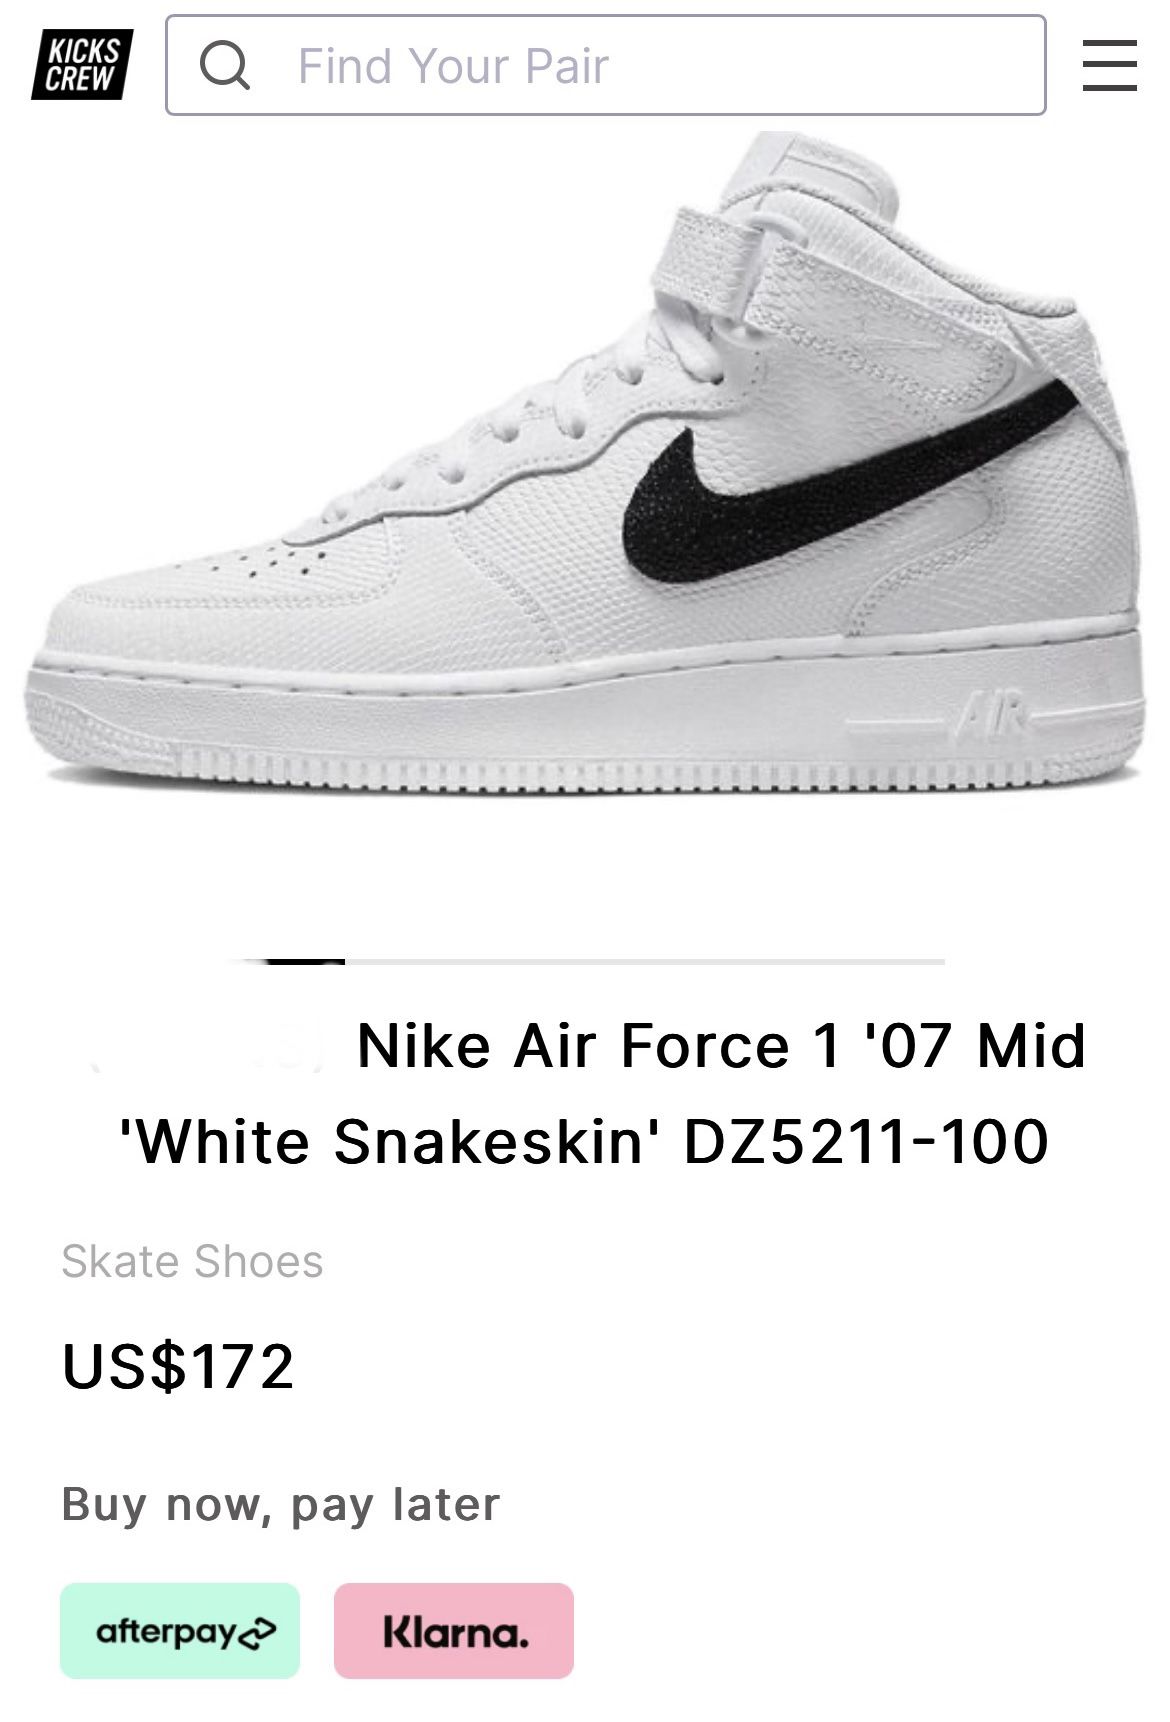 Nike Air Force 1 Mid White Snakeskin DZ5211-100